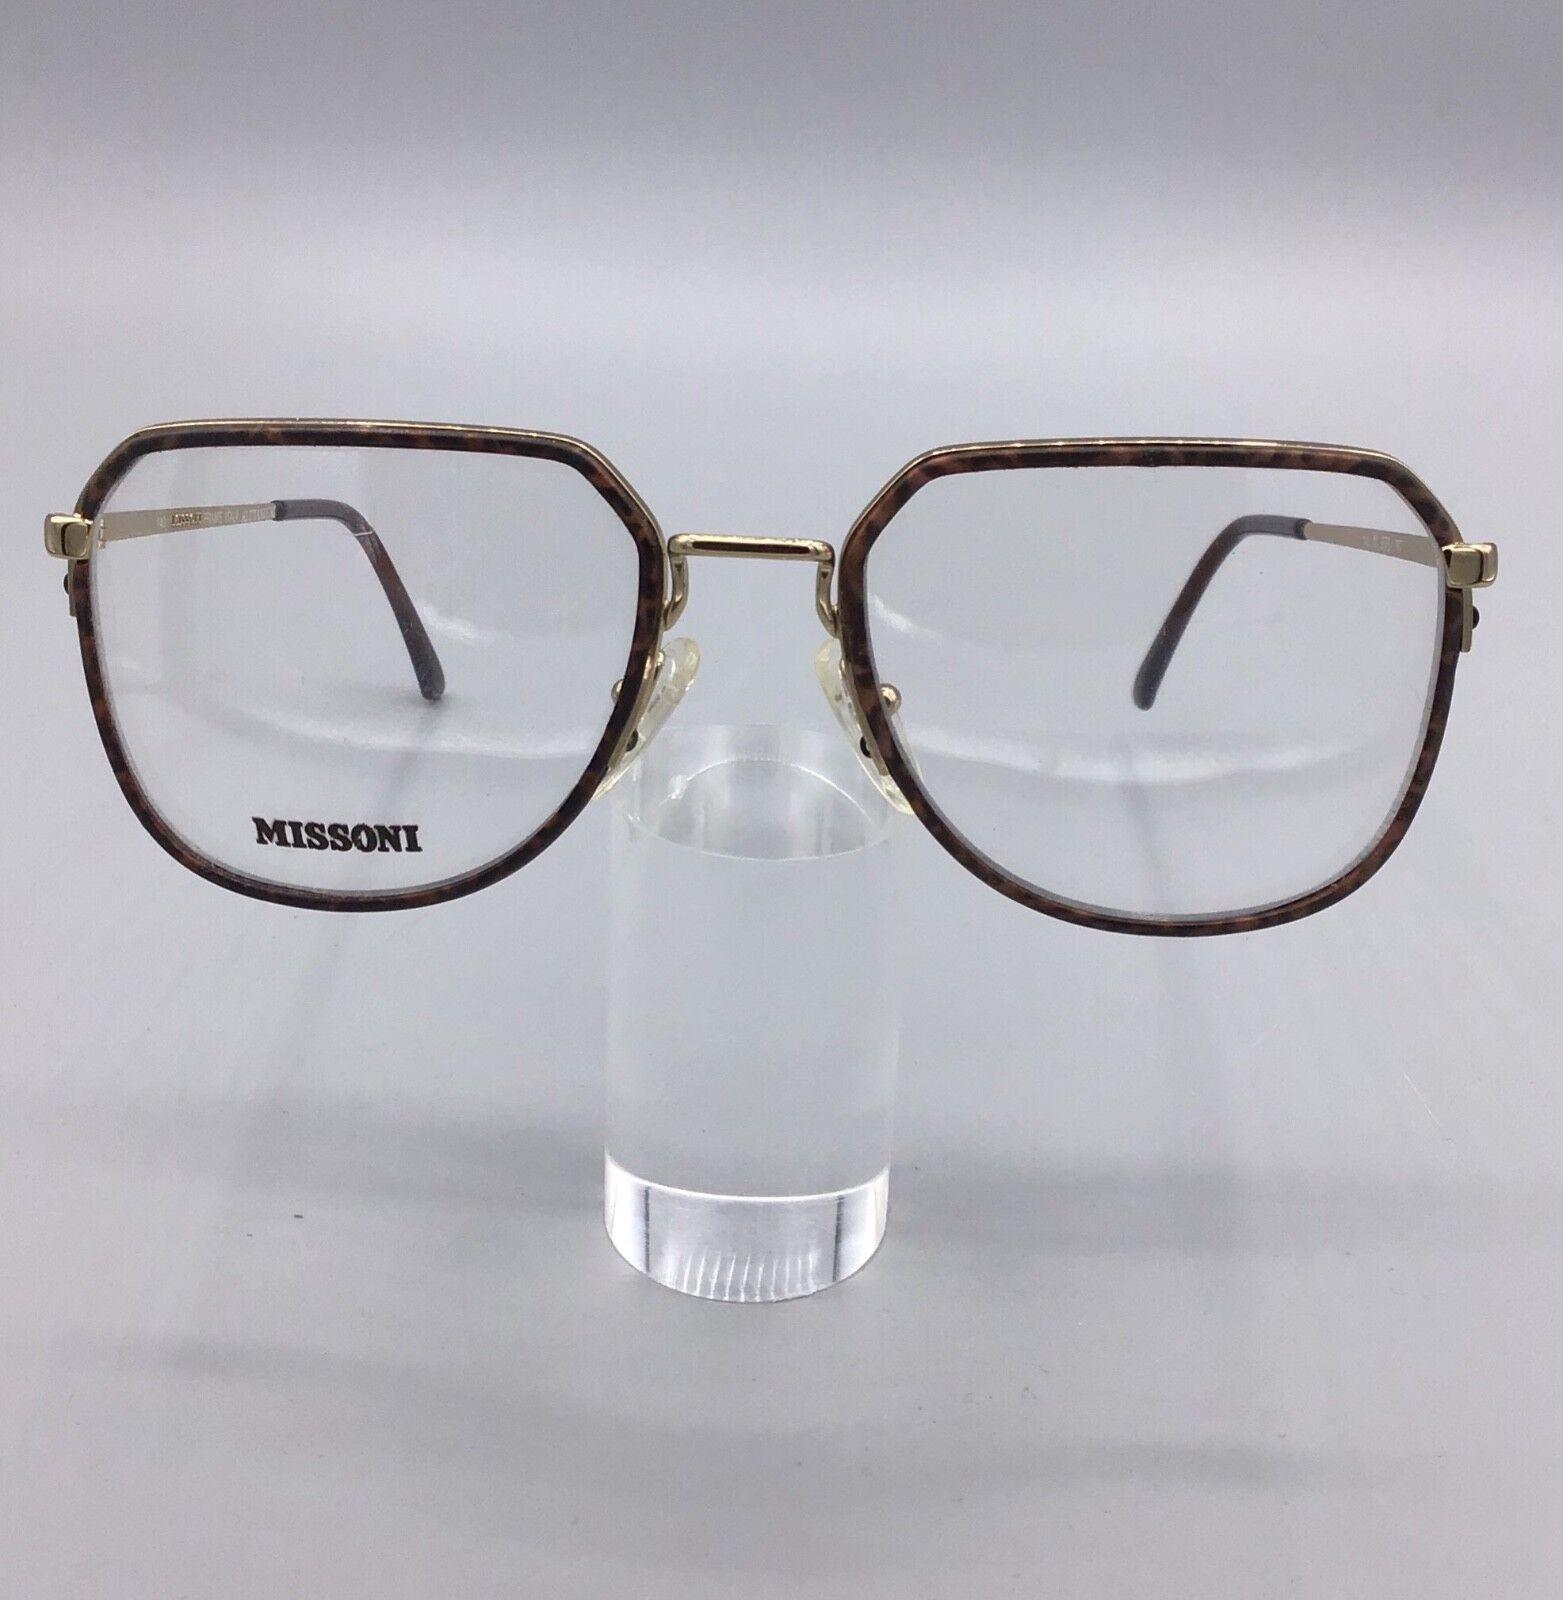 Missoni occhiale vintage model M875 79T Eyewear frame brillen lunettes